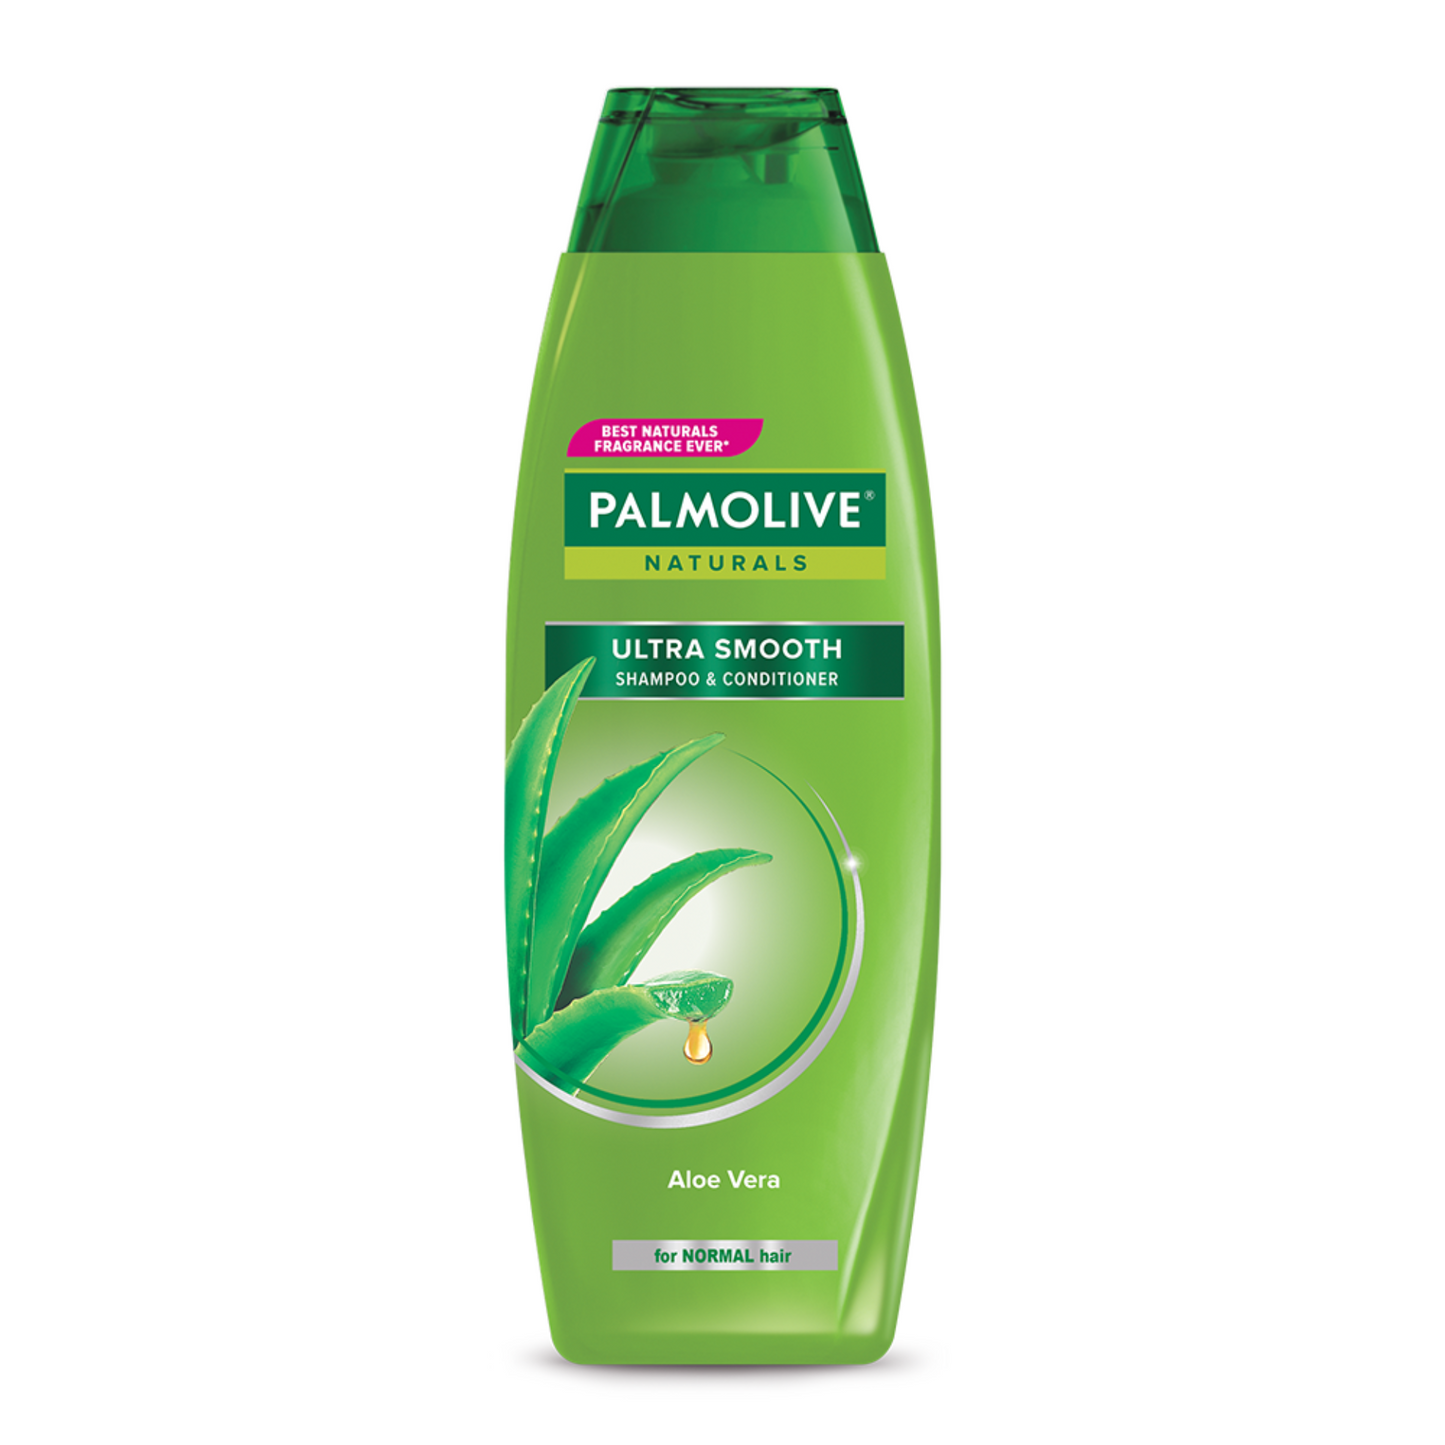 Palmolive Naturals Ultra Smooth Shampoo & Conditioner | 180mL